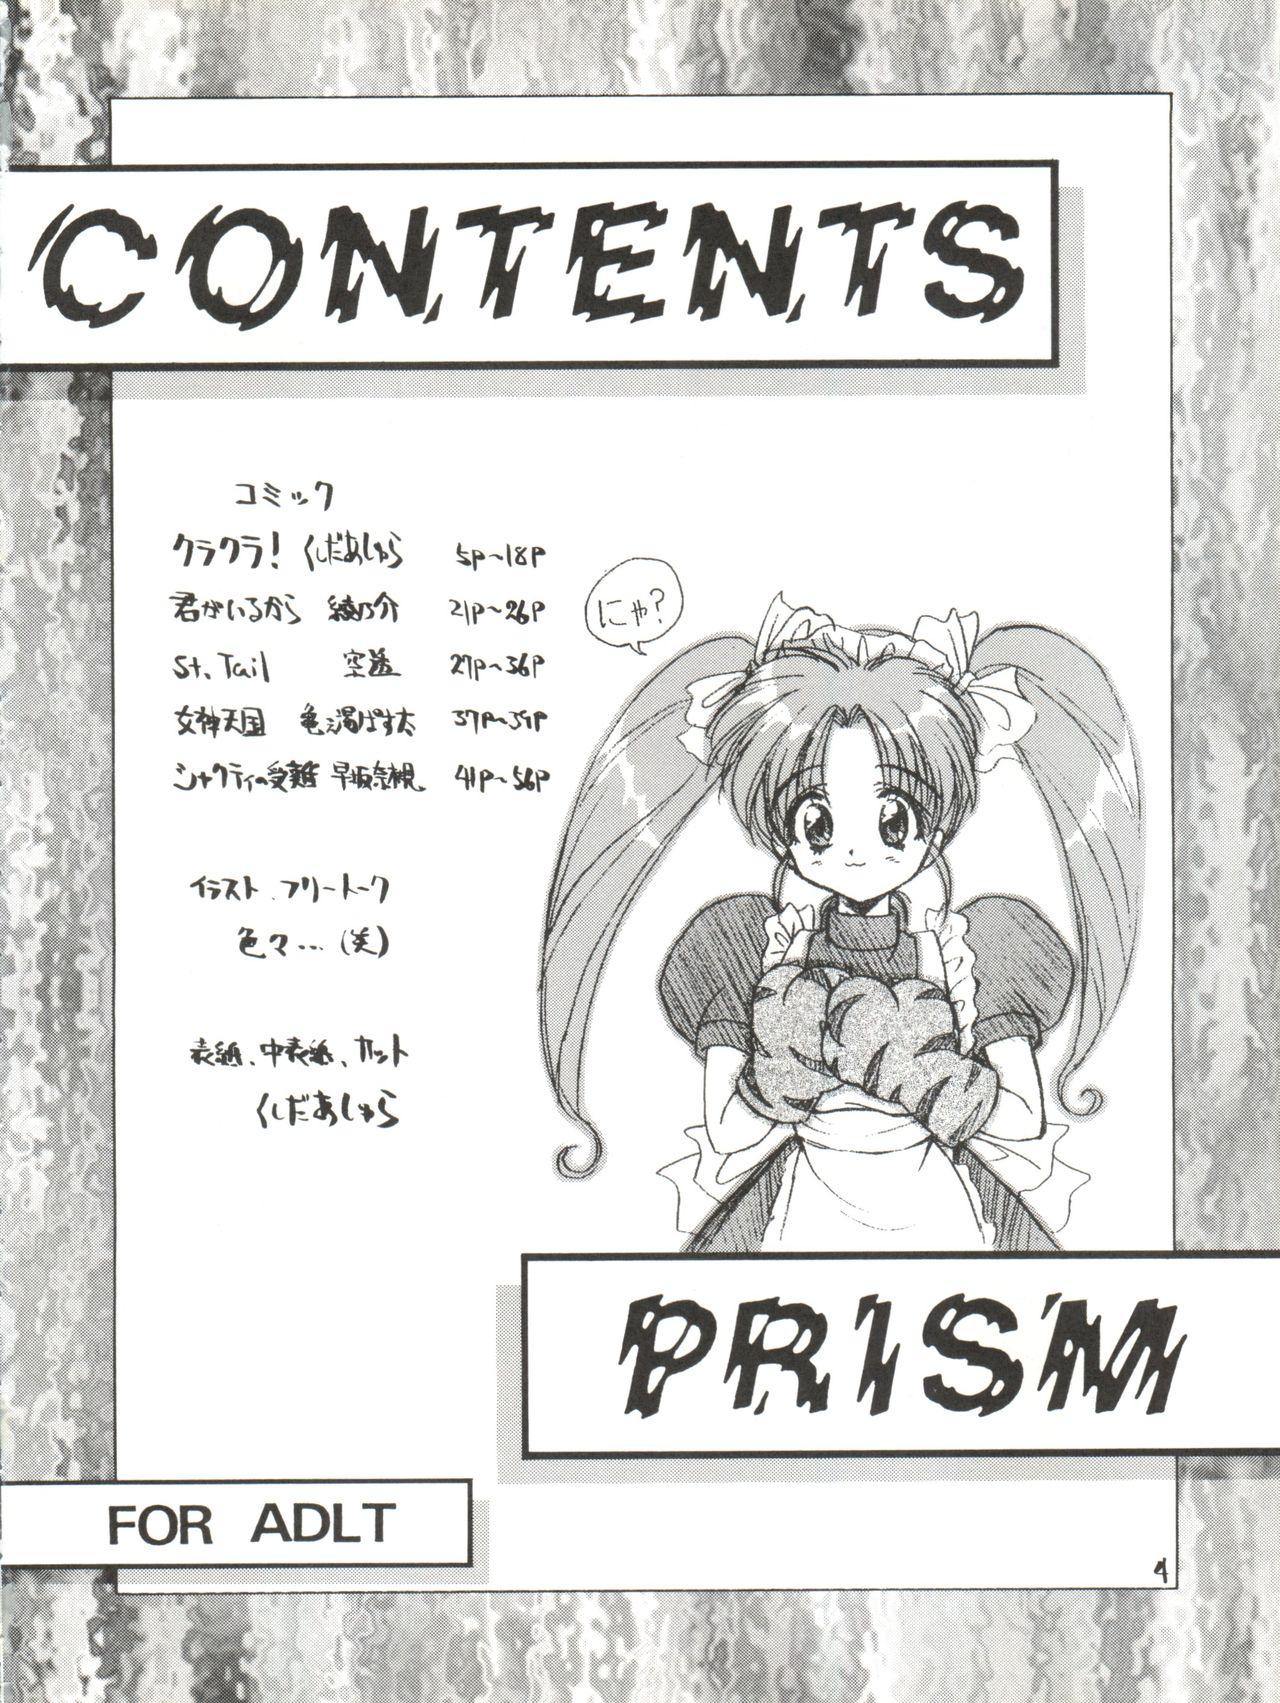 Porra PRISM - Tokimeki memorial Saint tail Wedding peach Victory gundam Megami paradise Hardsex - Page 4